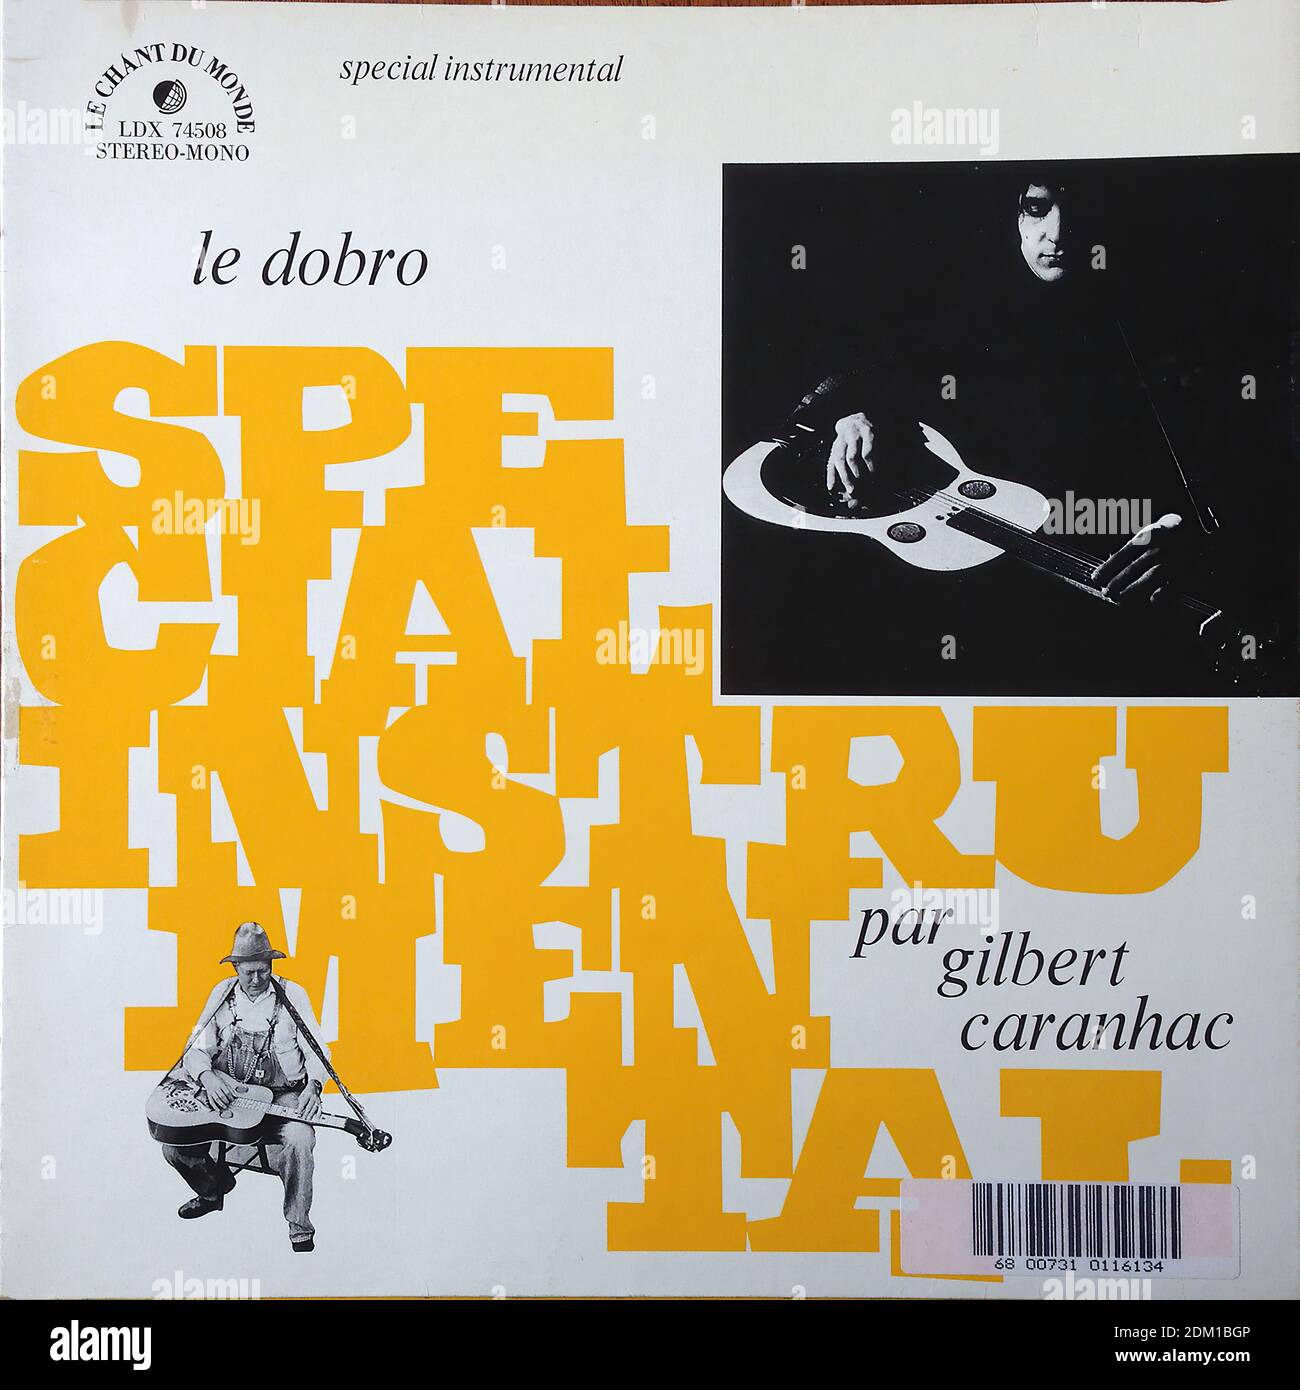 Le Dobro - Gilbert Caranhac Dobro & Bluegrass Connection - Special  Instrumental, le Chant du Monde LDX 74508 - Vintage vinilo álbum cover  Fotografía de stock - Alamy